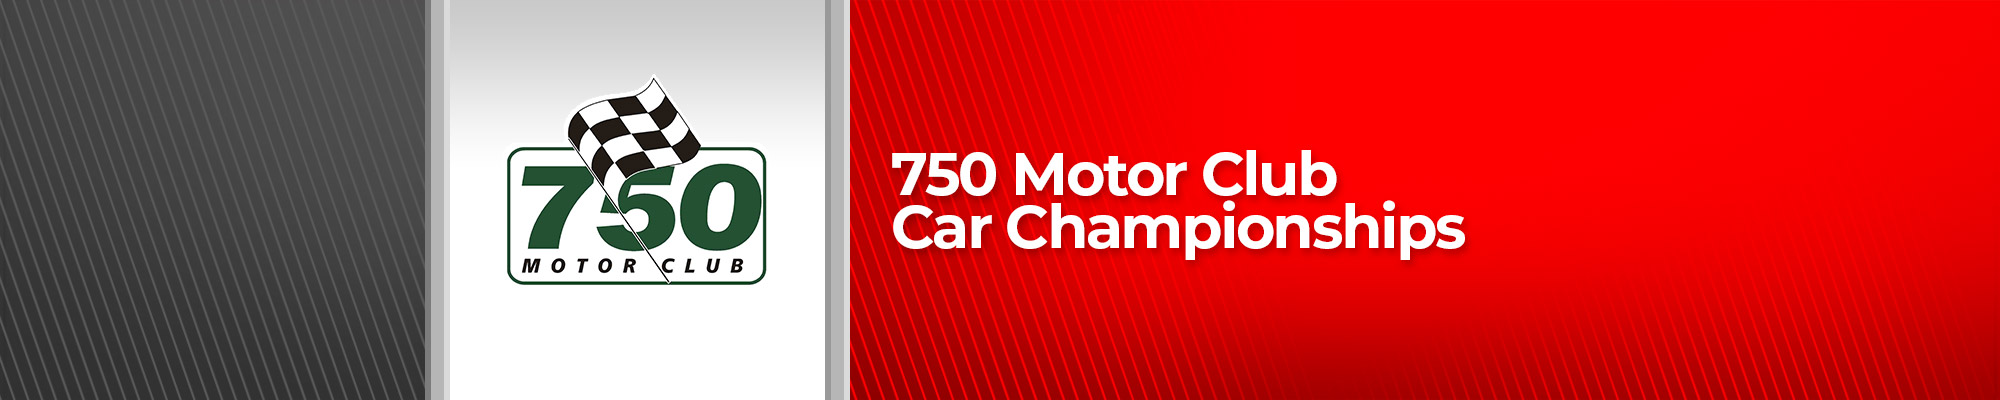  750 Motor Club Car Championships - POSTPONED